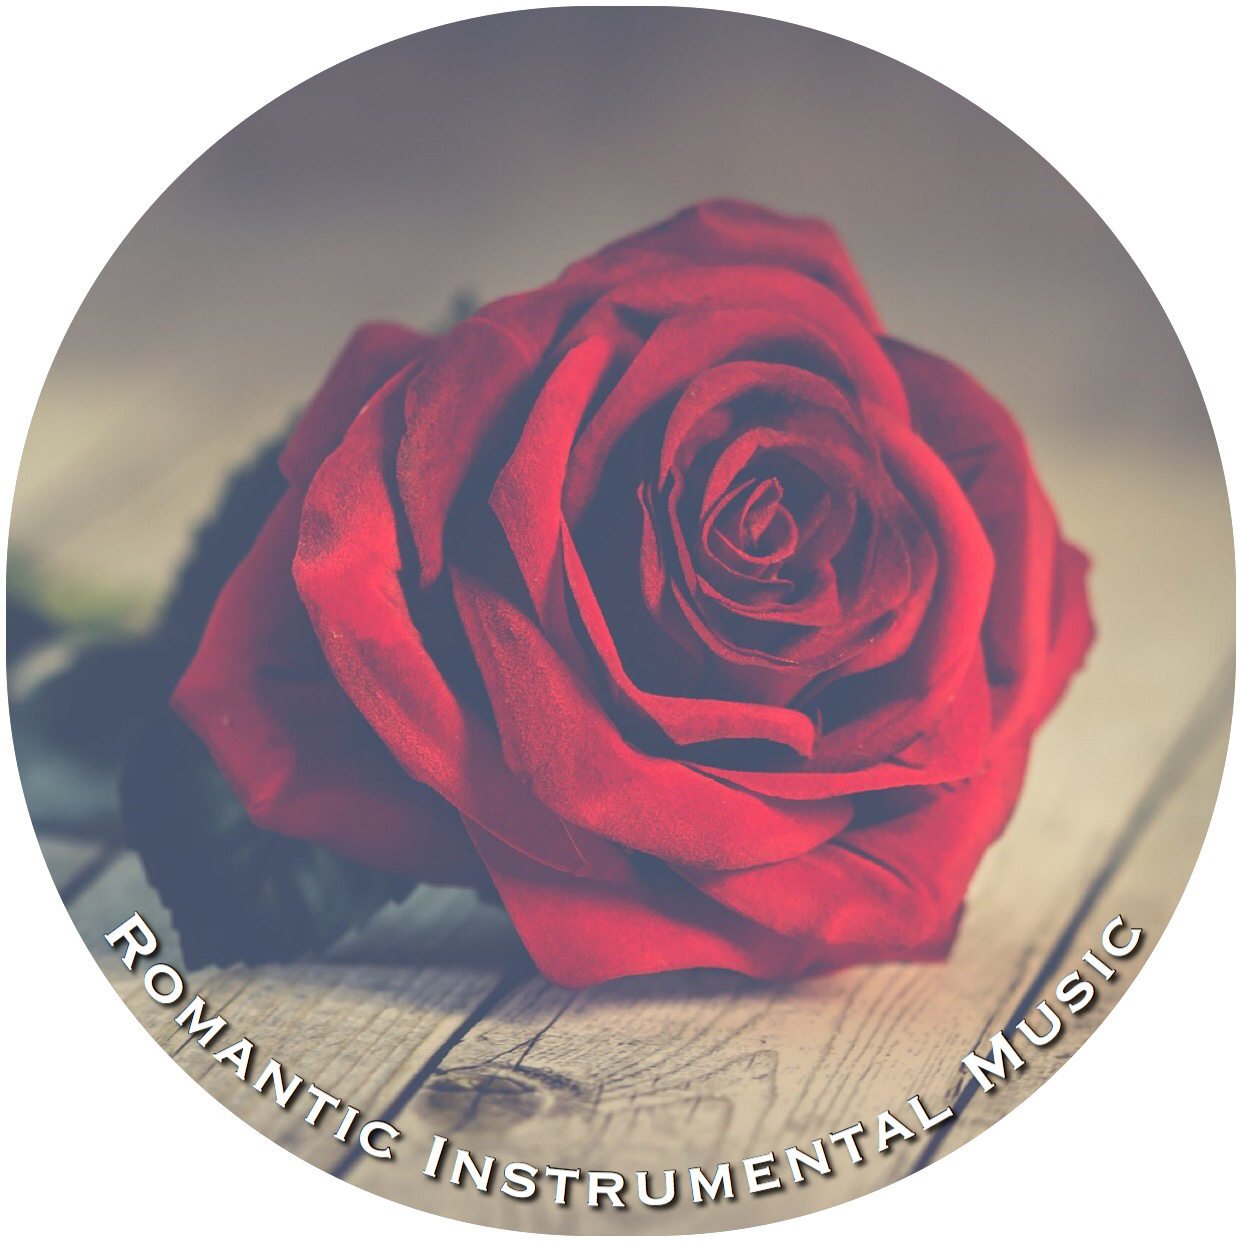 Best instrumental love songs free download in mp3 format